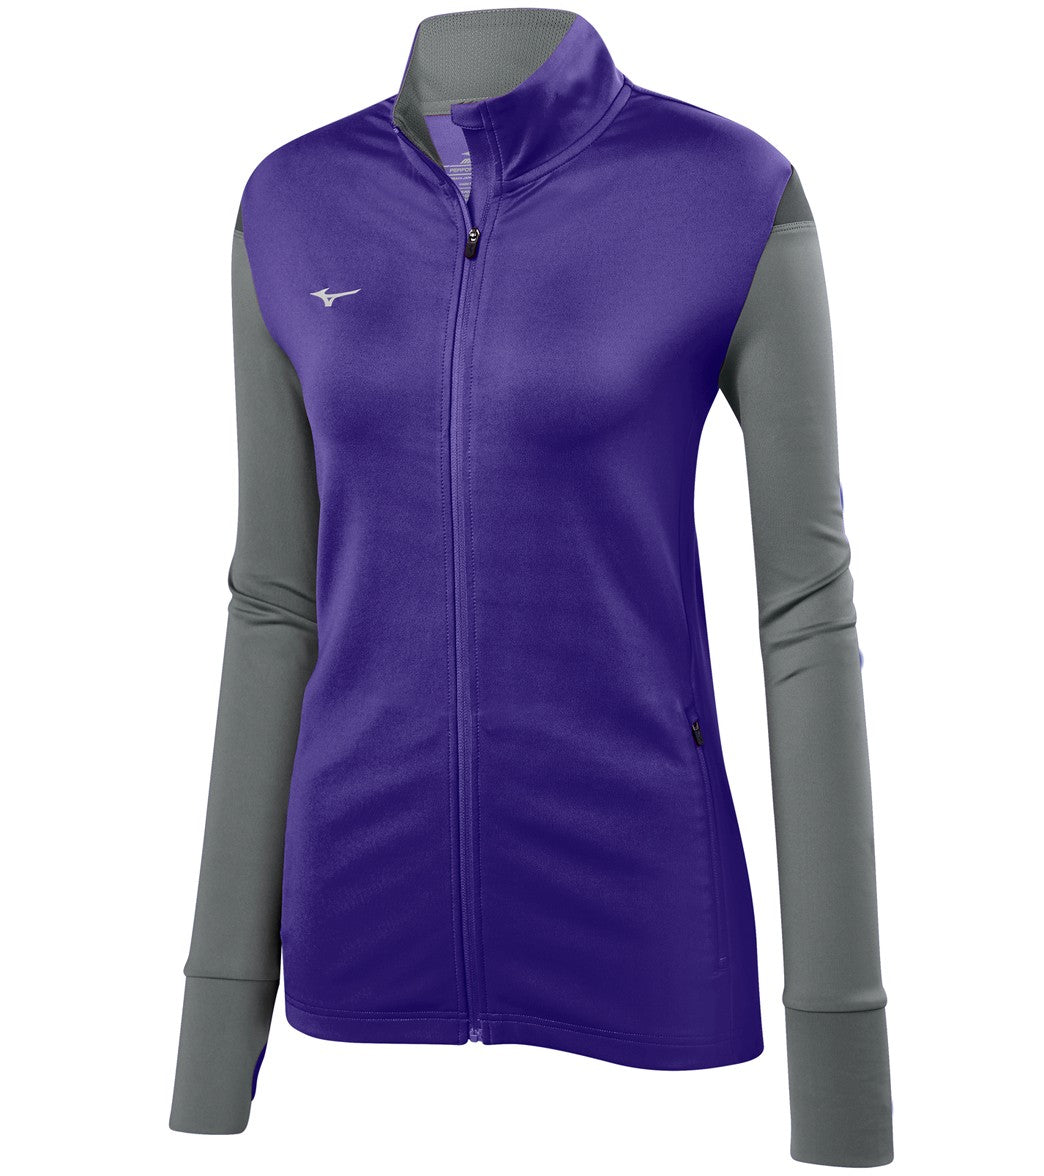 Mizuno Girls' Horizon Full Zip Volleyball Jacket - Purple/Grey/Charcoal Large Cotton/Polyester - Swimoutlet.com